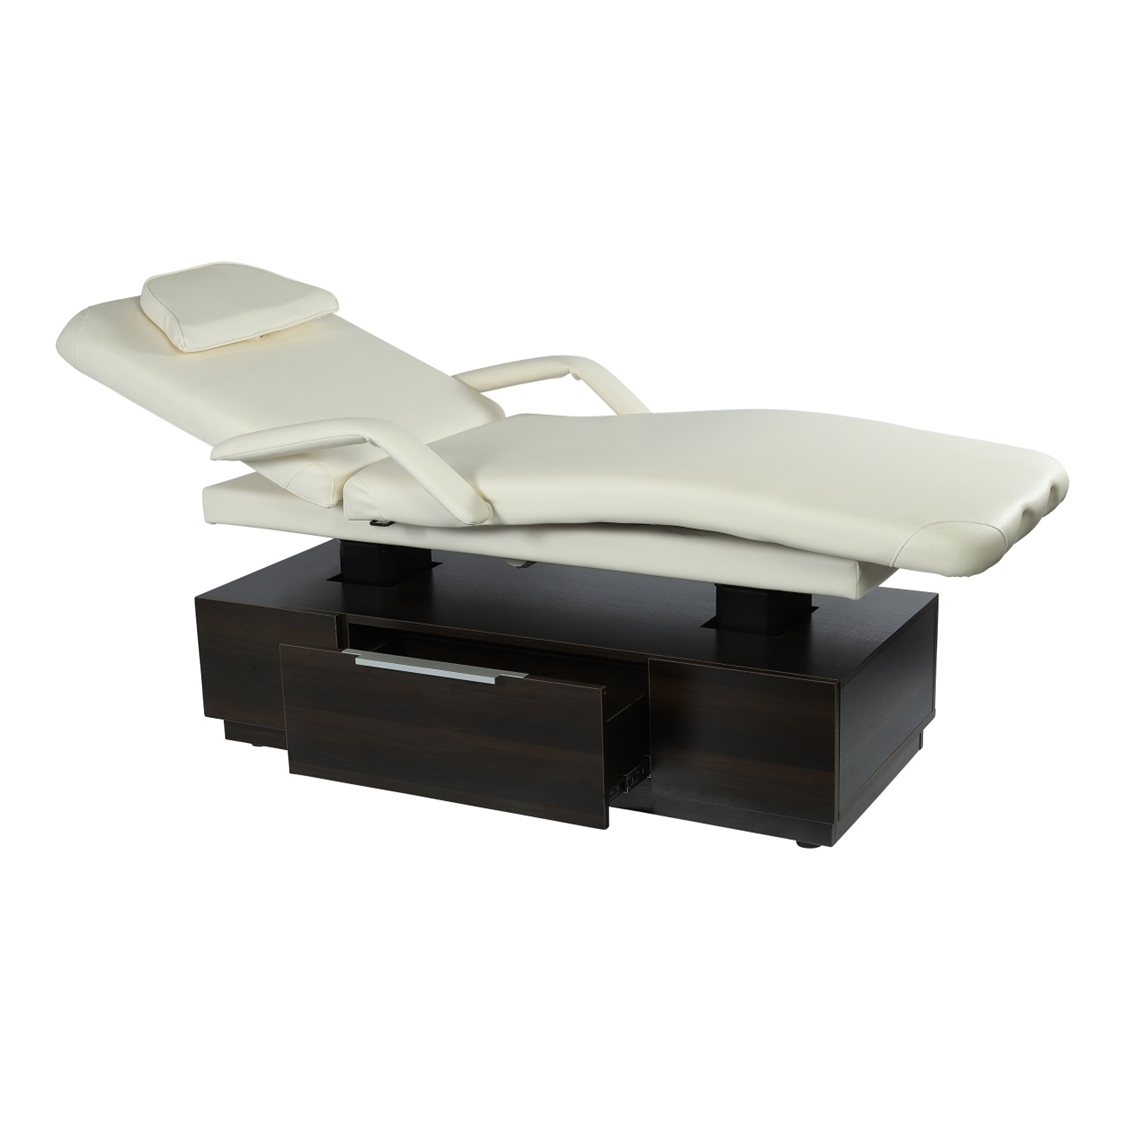 Laguna-S Spa Treatment Table - Garfield Commercial Enterprises Salon Equipment Spa Furniture Barber Chair Luxury